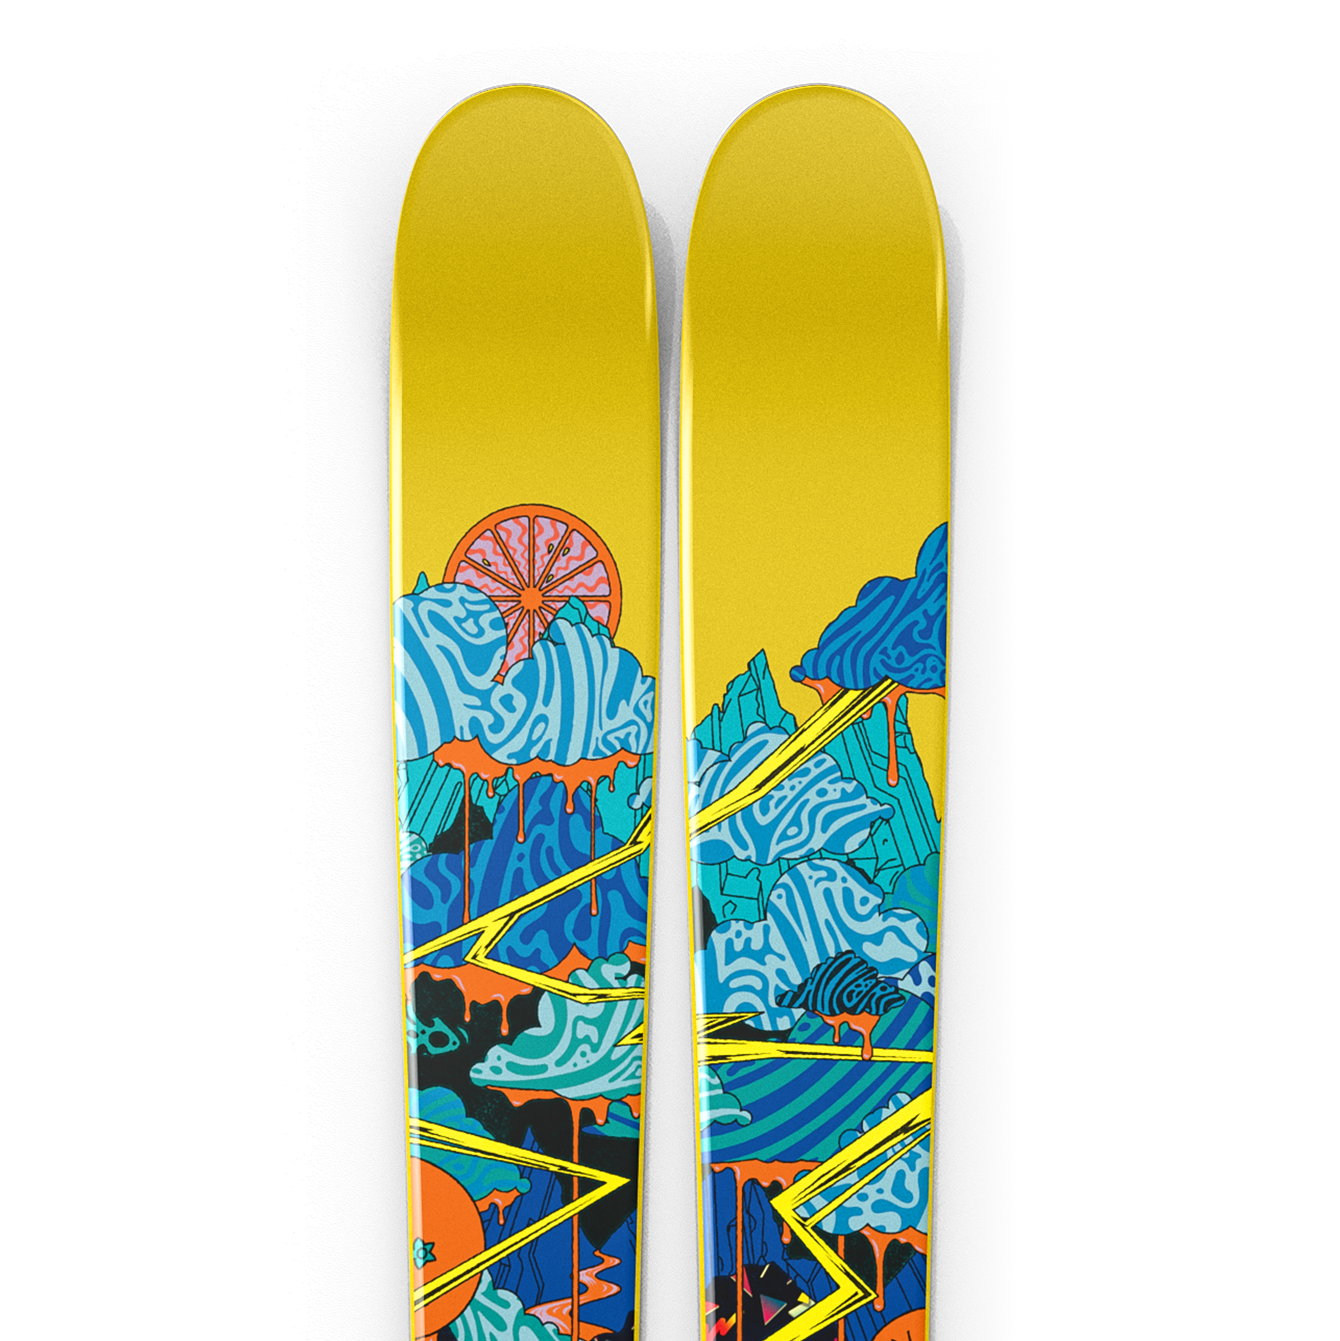 turnering peave Udstyr Limited Edition Skis · J skis - Limited Edition skis designed by Jason  Levinthal